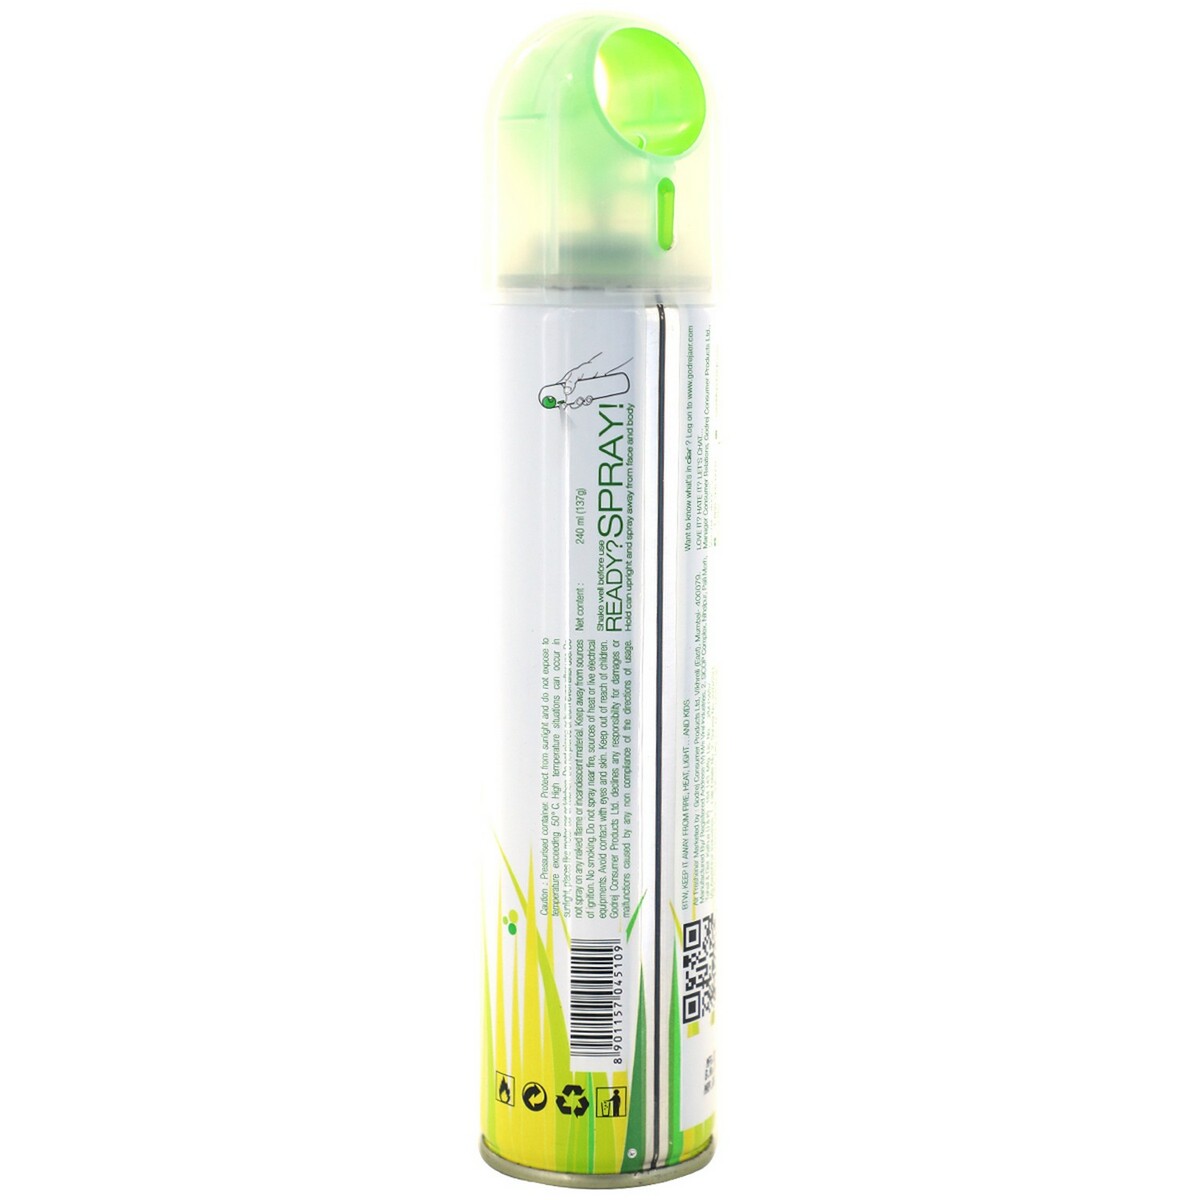 Godrej Aer Spray Air Freshener- Fresh Lush Green 220 ml